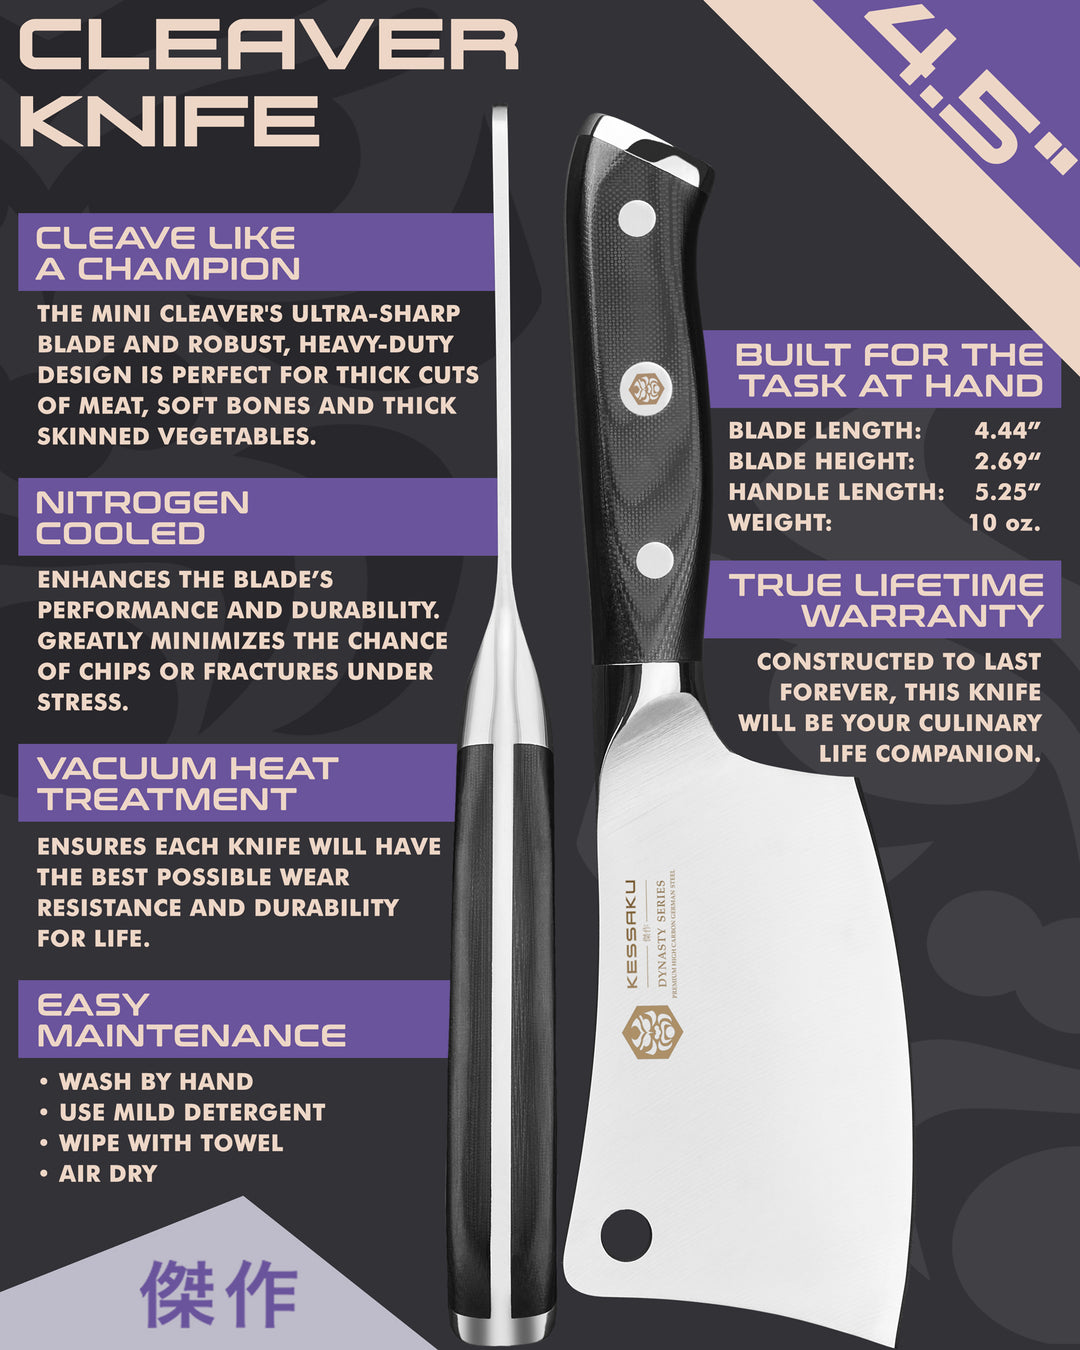 Kessaku Dynasty Series Mini Cleaver Knife uses, dimensions, maintenance, warranty info, and additional blade treatments